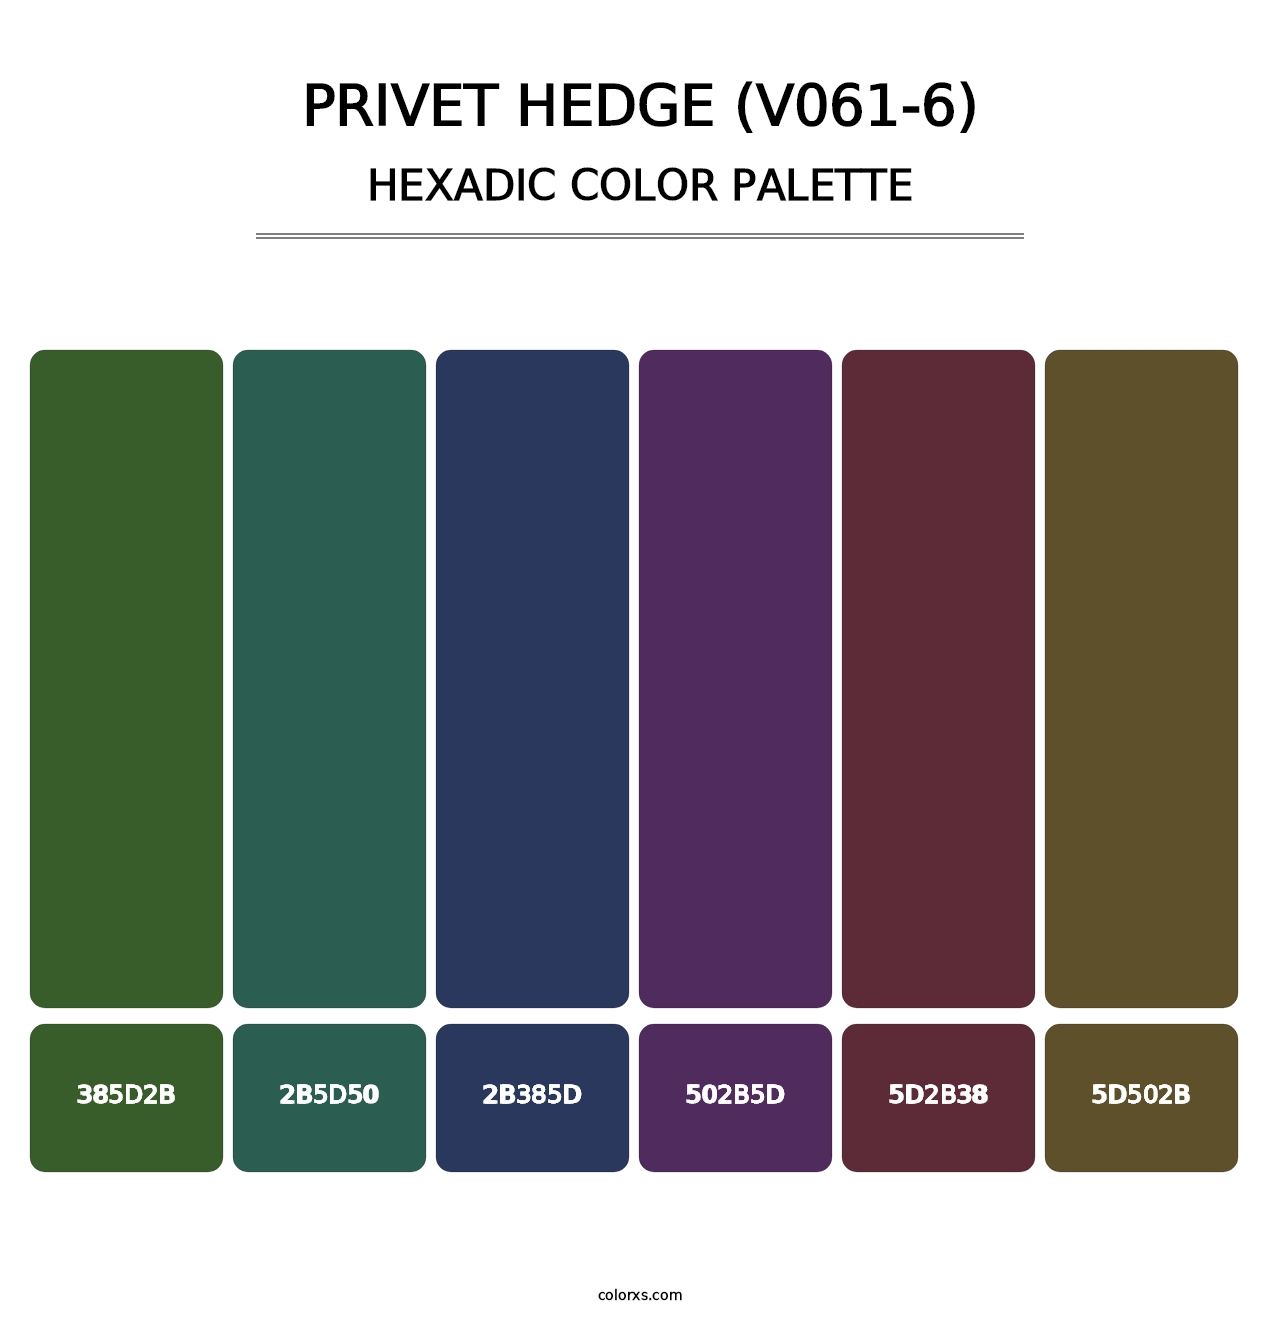 Privet Hedge (V061-6) - Hexadic Color Palette